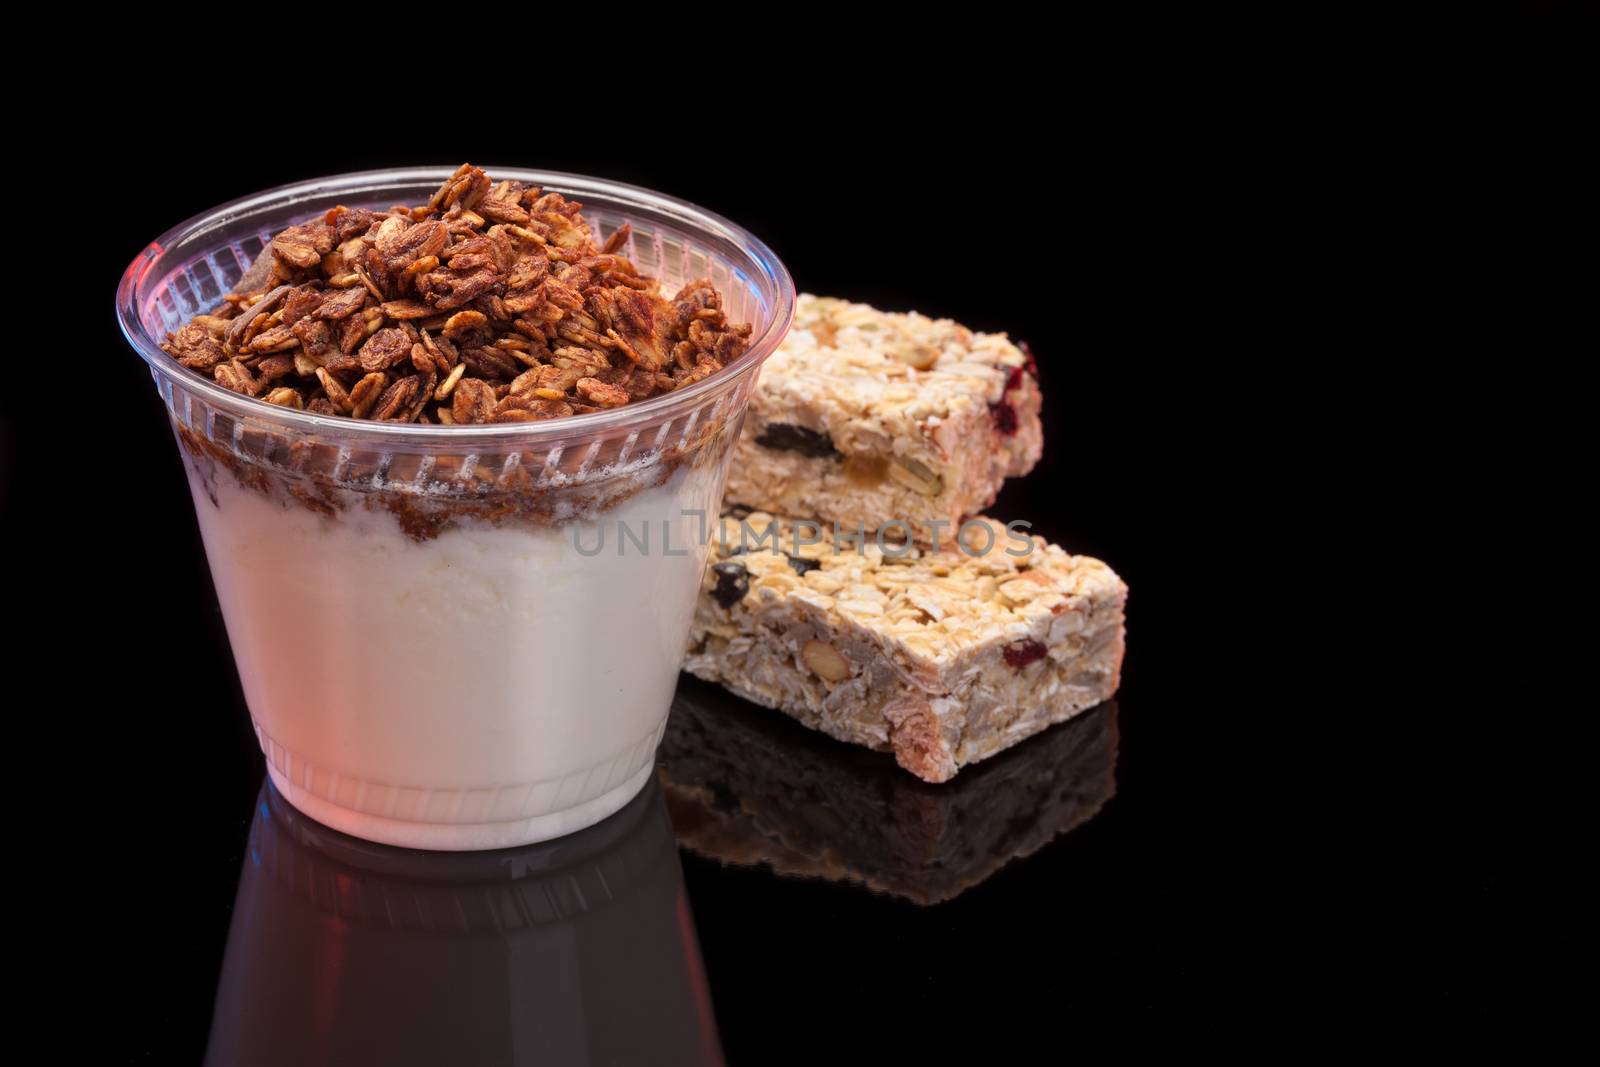 Yogurt with chocolade granola and granola bar with fruits and nuts by igor_stramyk